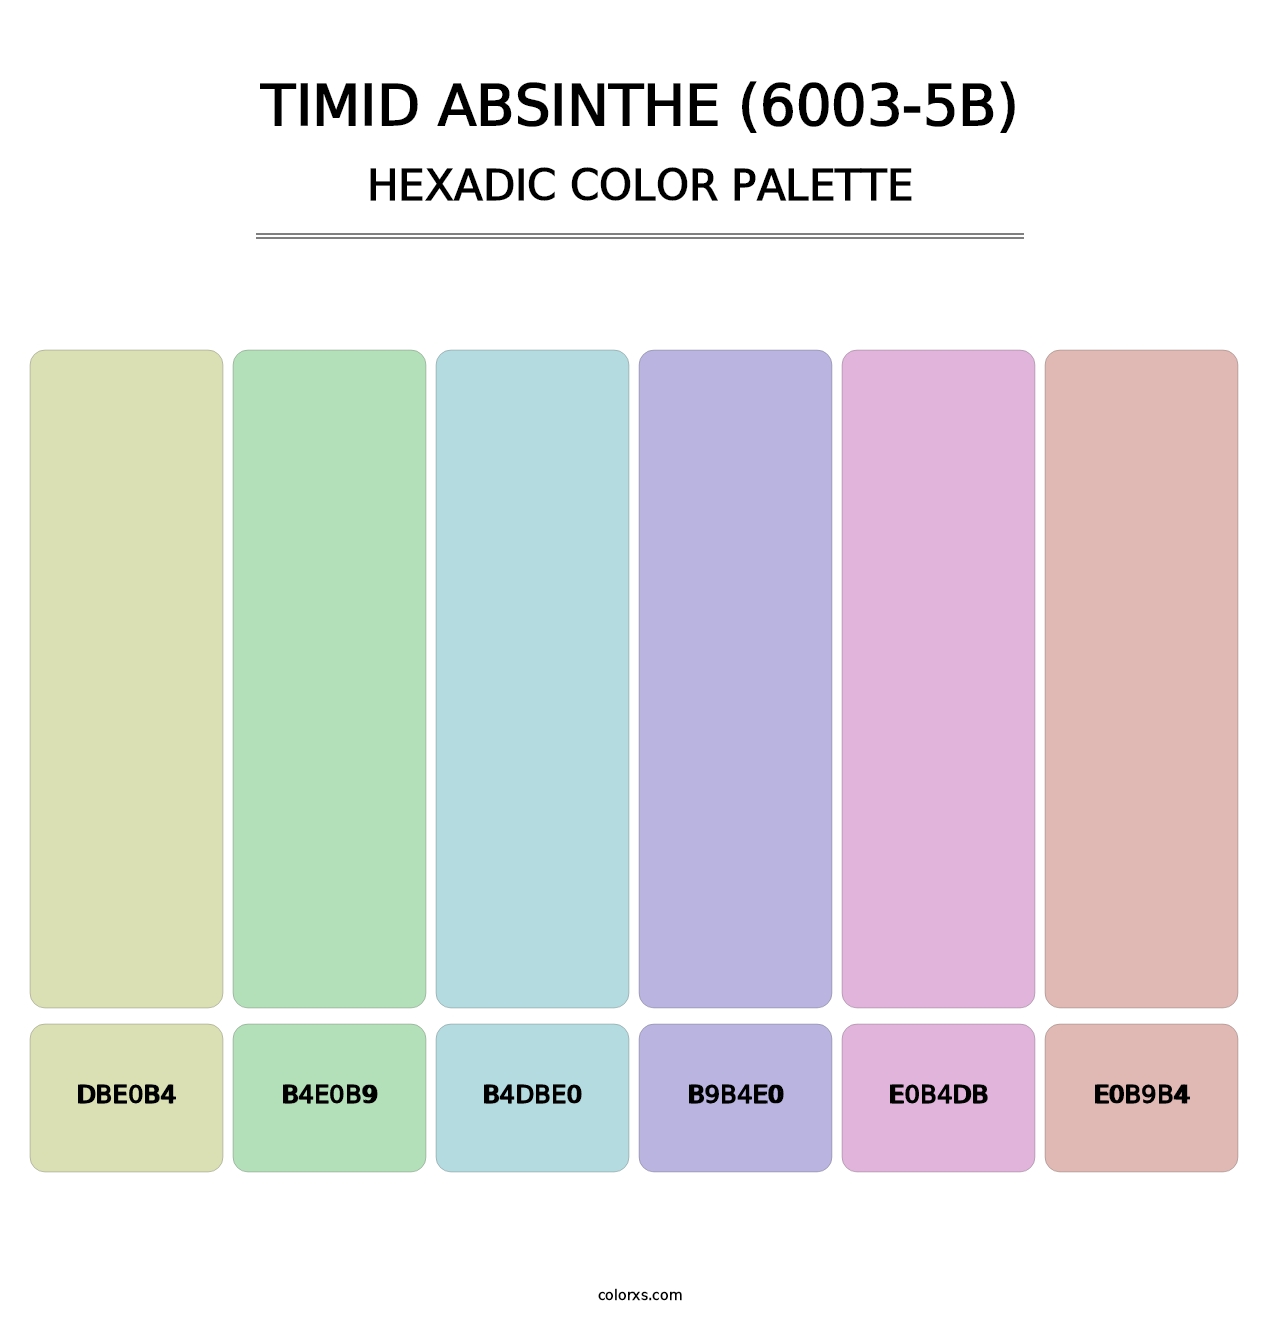 Timid Absinthe (6003-5B) - Hexadic Color Palette